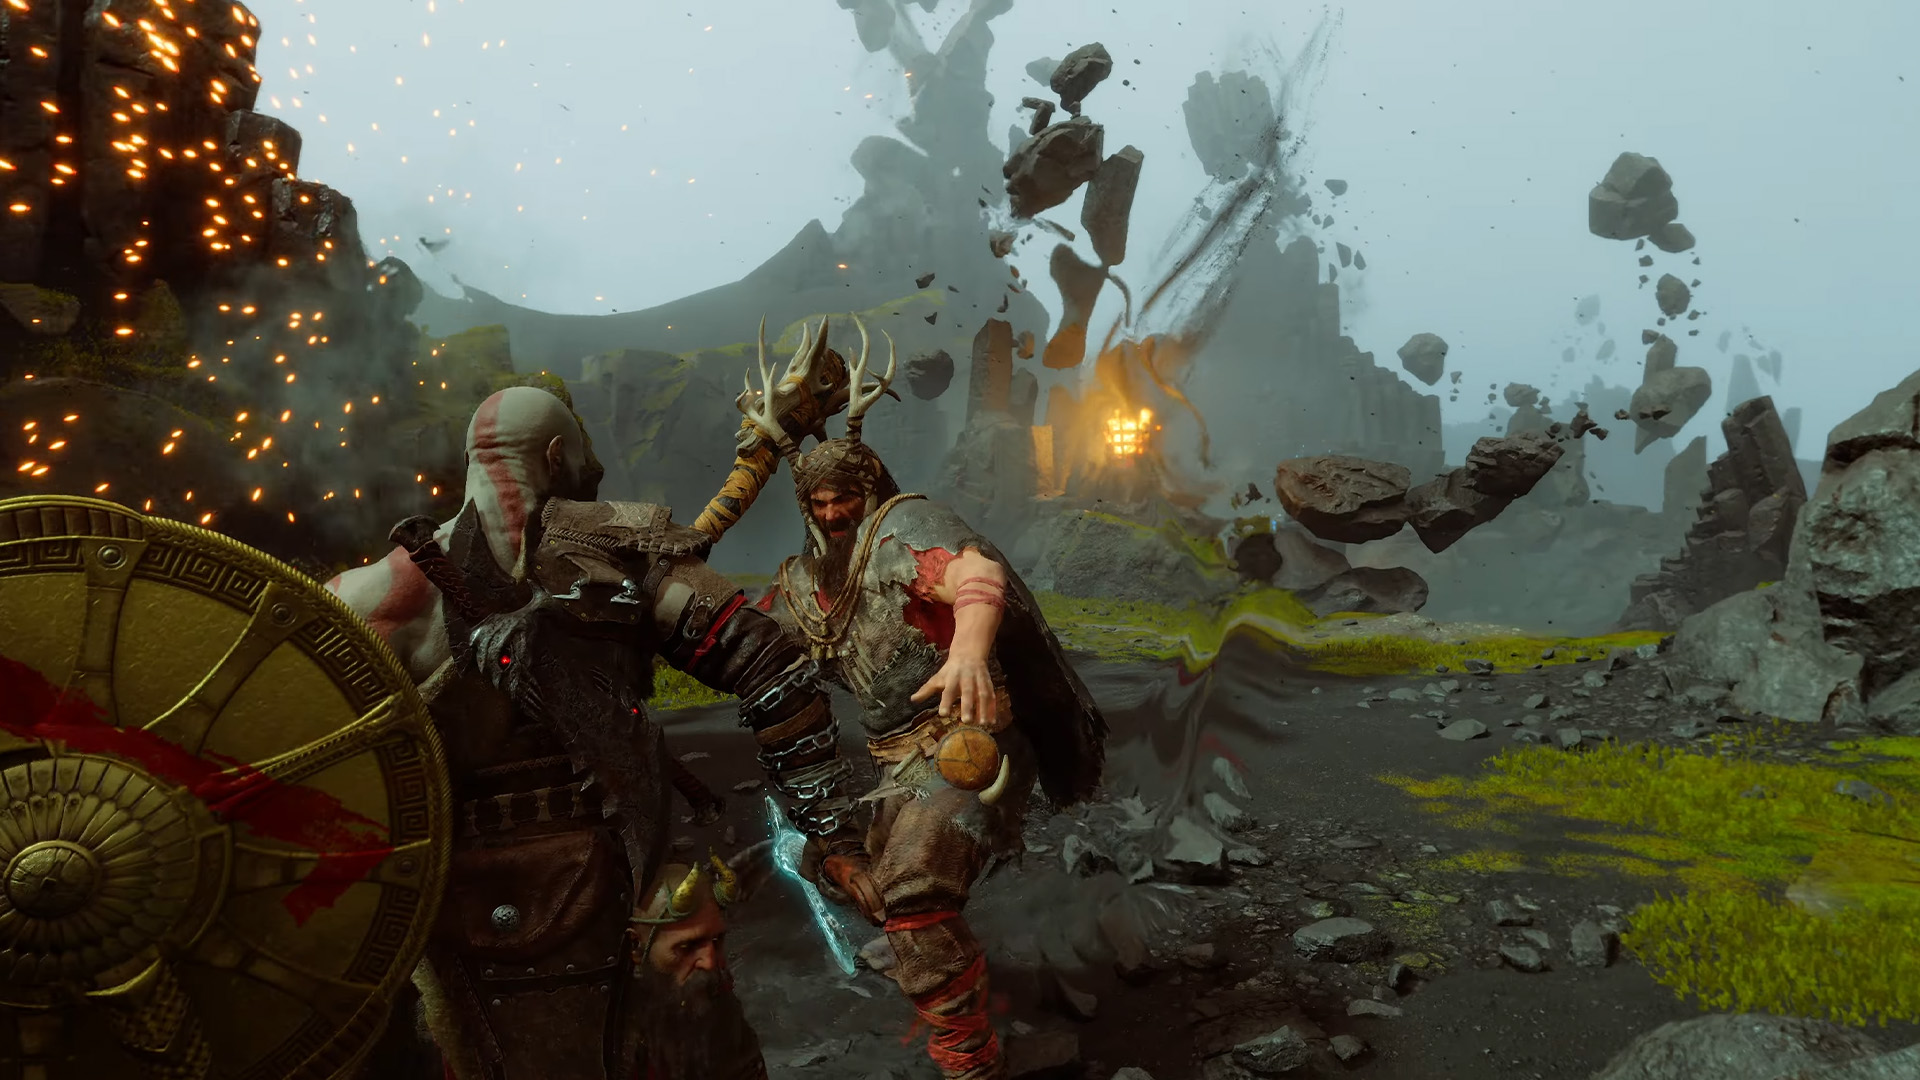 God Of War Ragnarök Valhalla Free DLC Announced For Next Week - Noisy Pixel